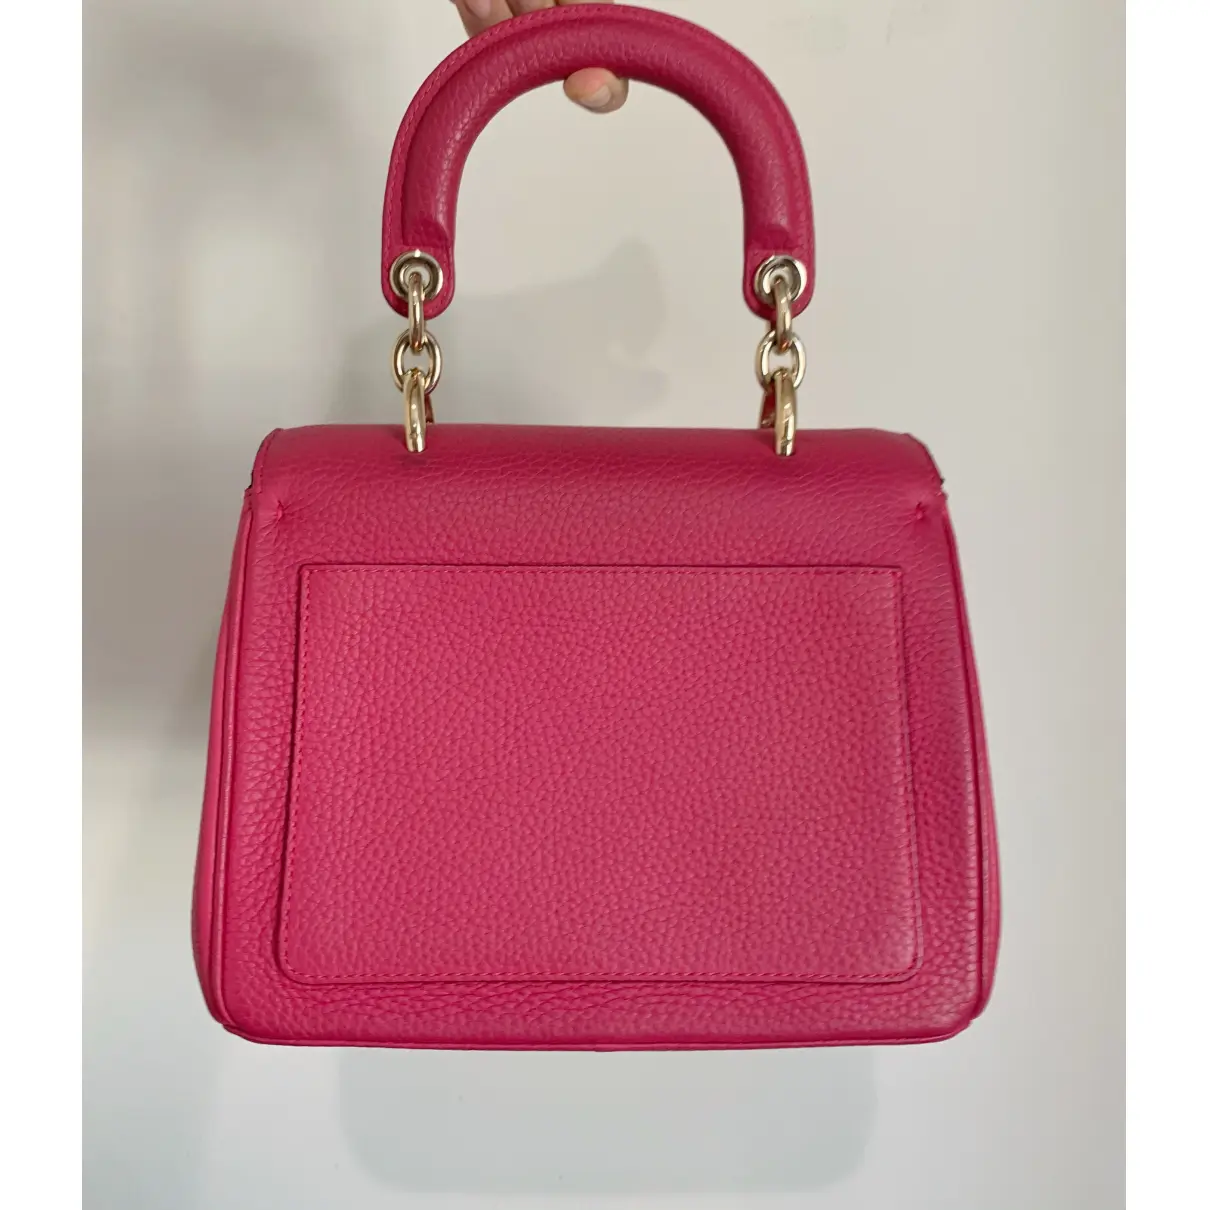 Buy Dior Be Dior leather handbag online